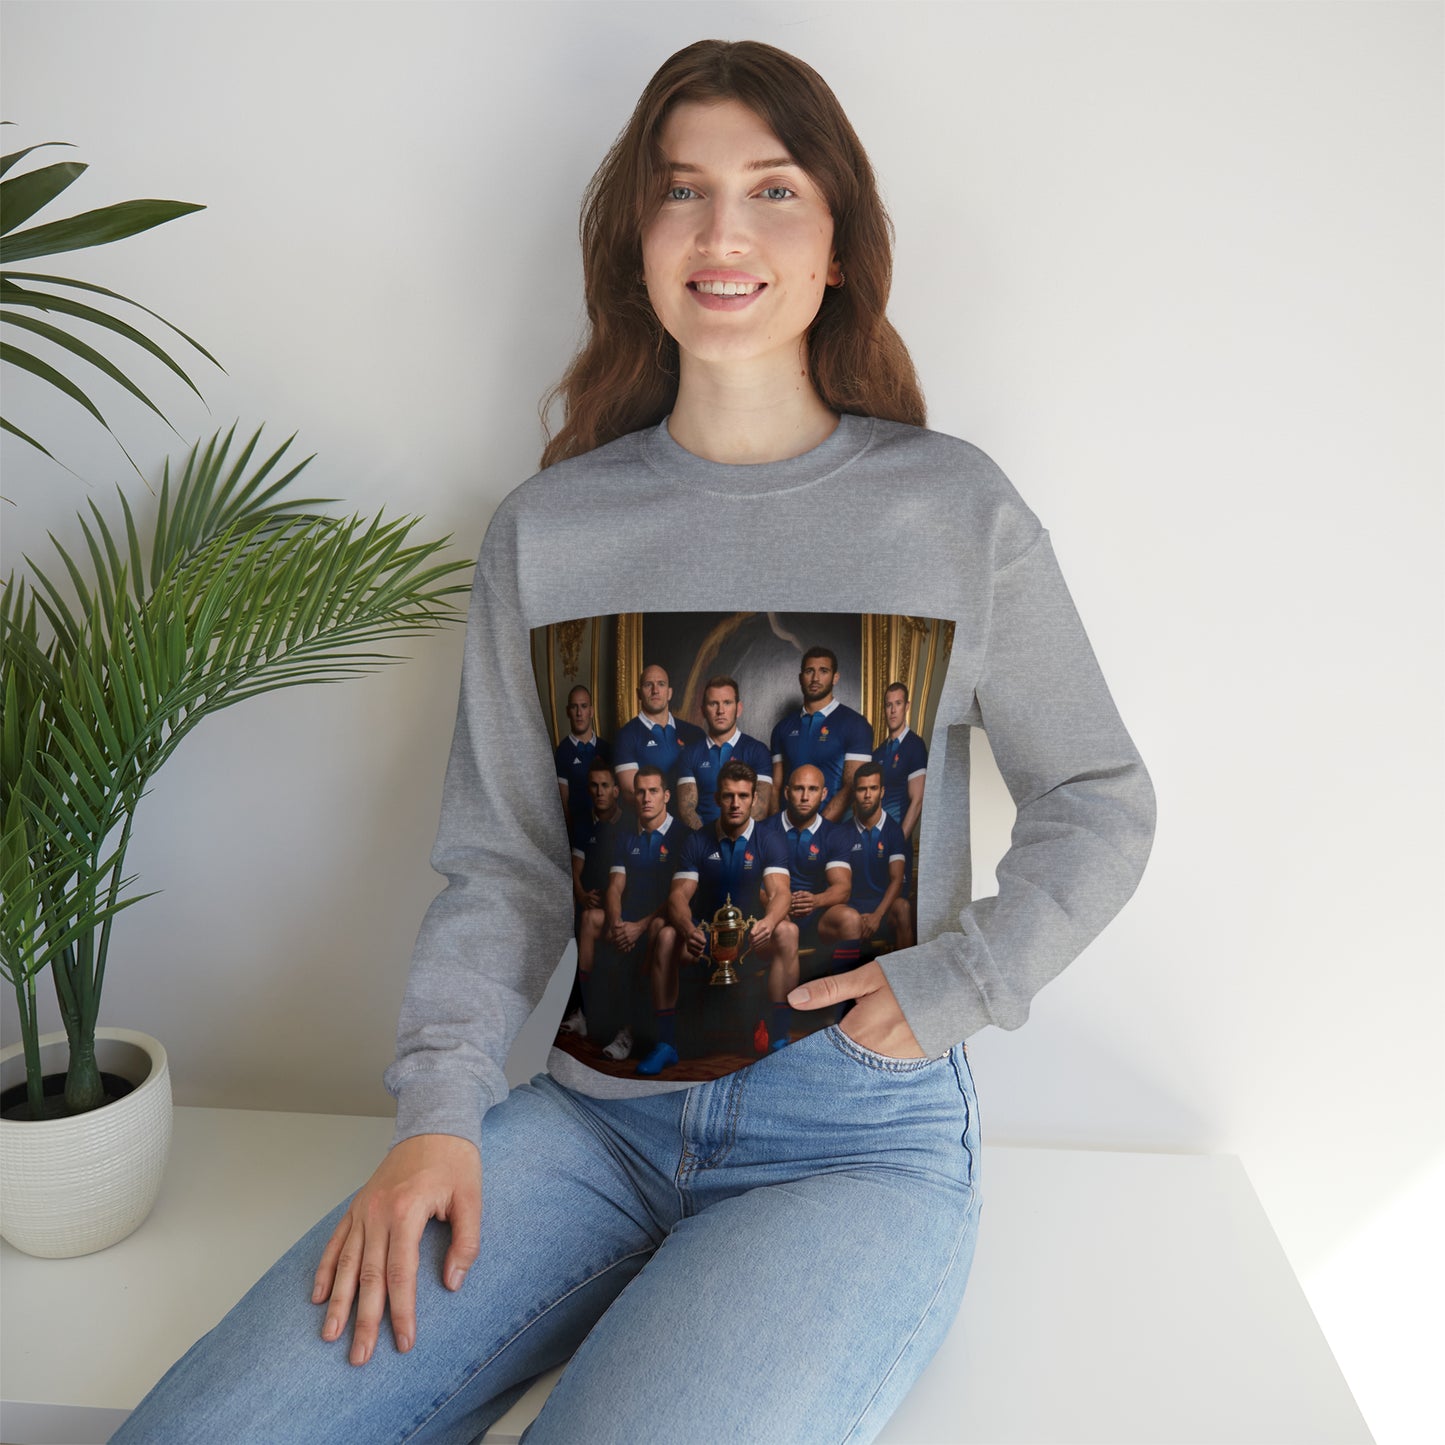 France World Cup Photoshoot - light sweatshirts